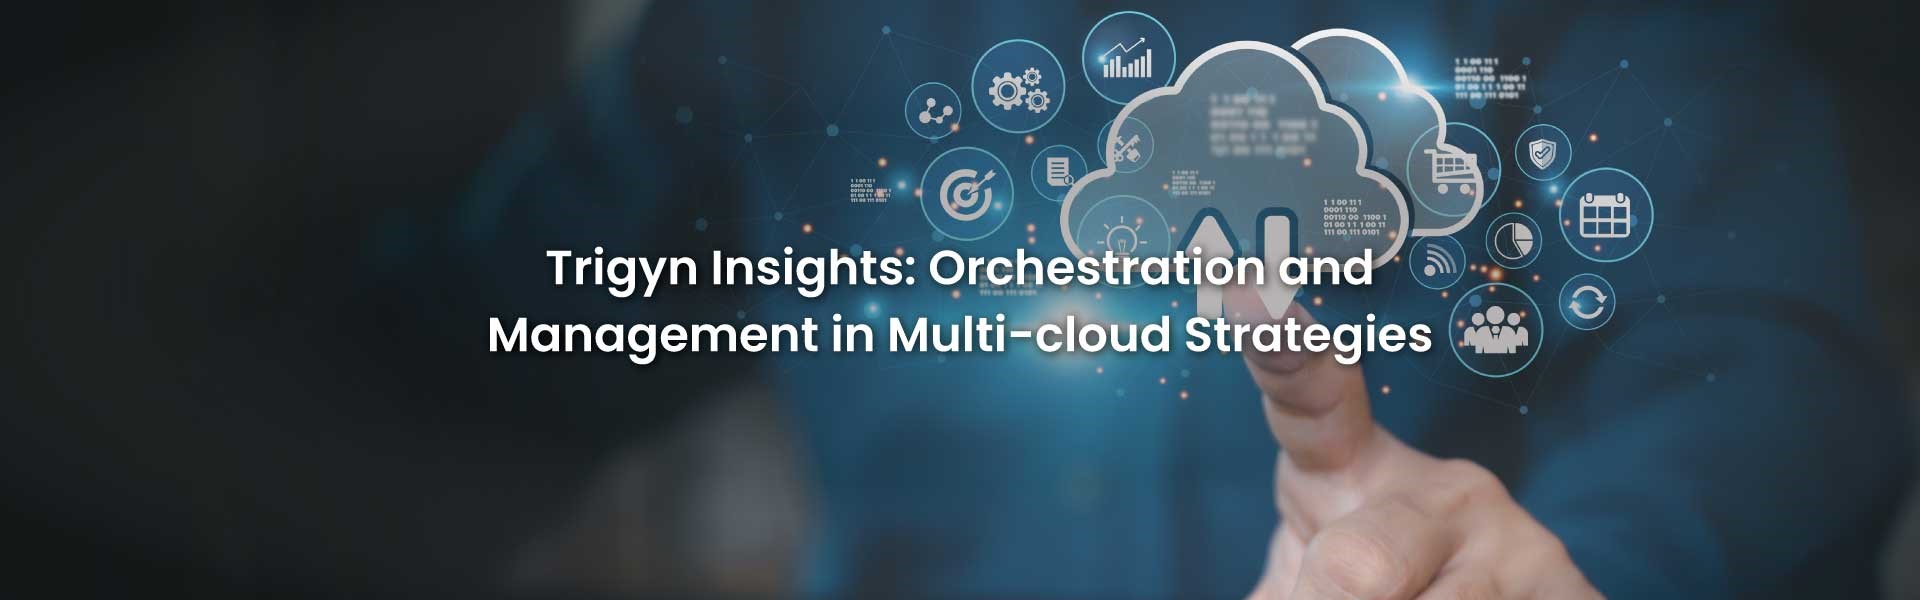 Management in Multi-cloud Strategies